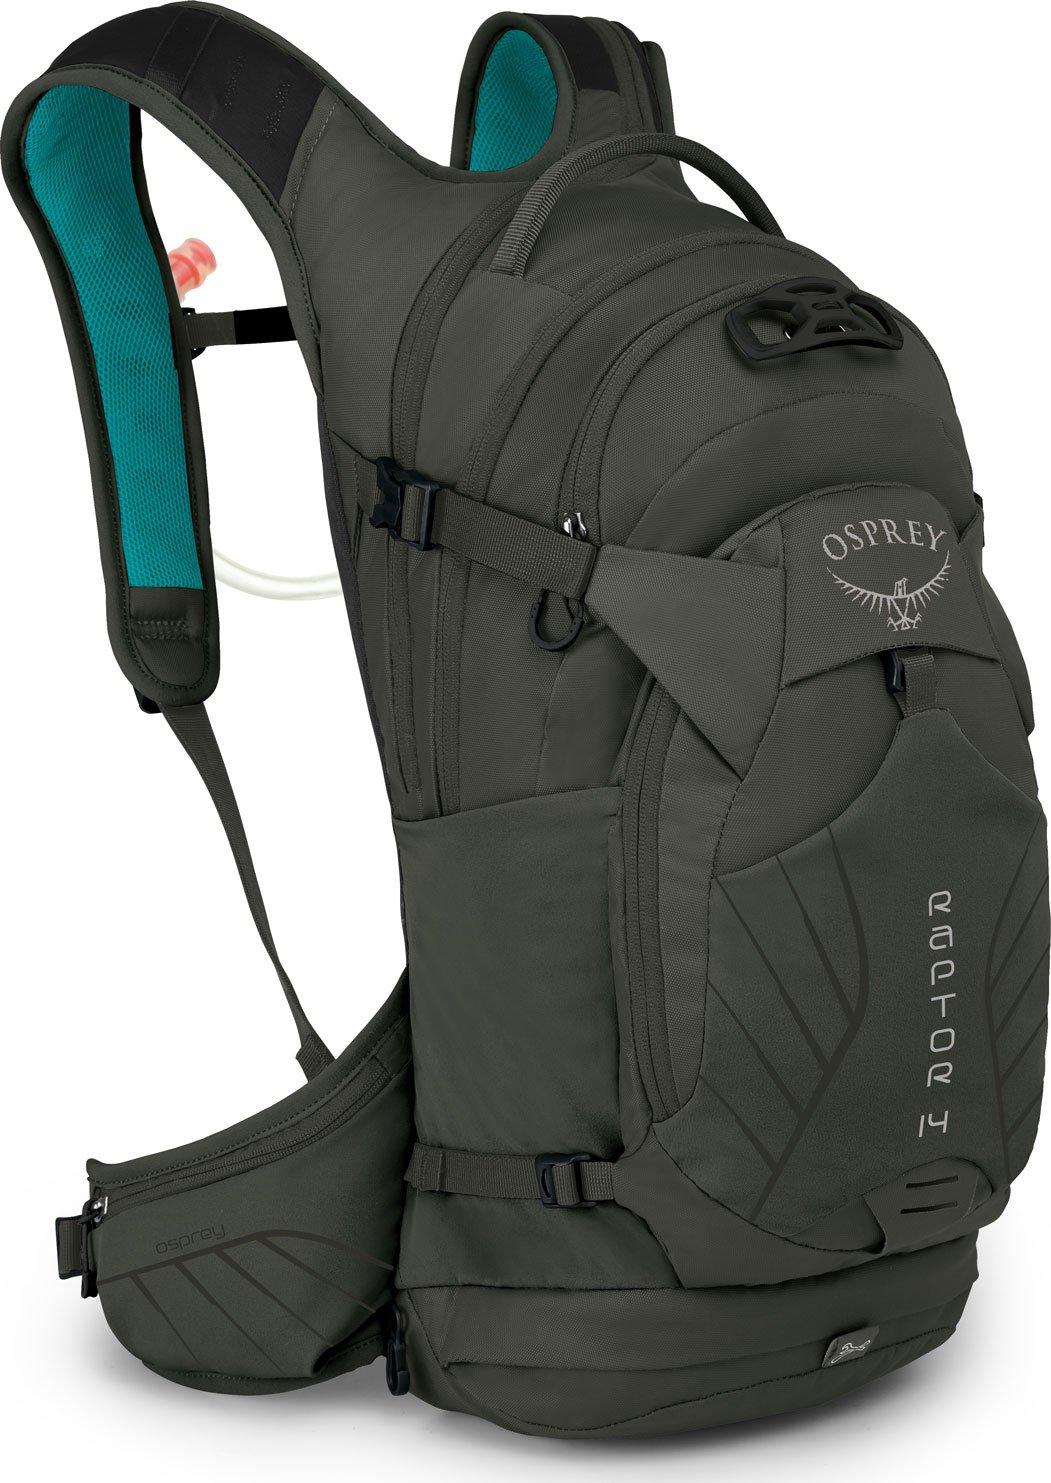  Osprey Raptor 14 Daypack (with Hydration System), Green